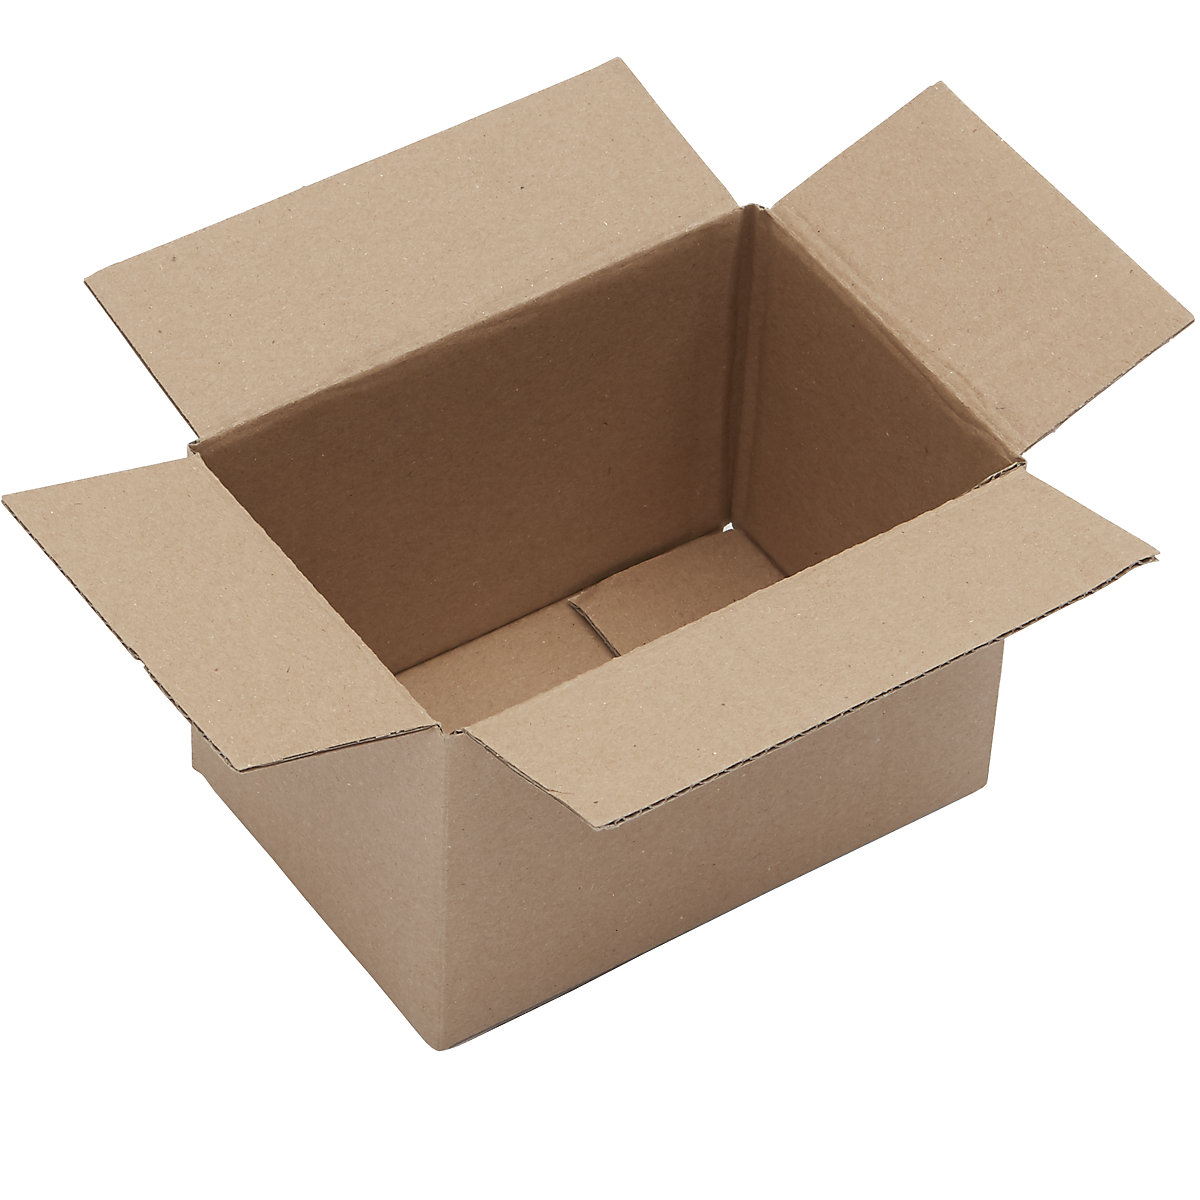 Caja de cartón formato B1 60x40x40 cm - Controlpack